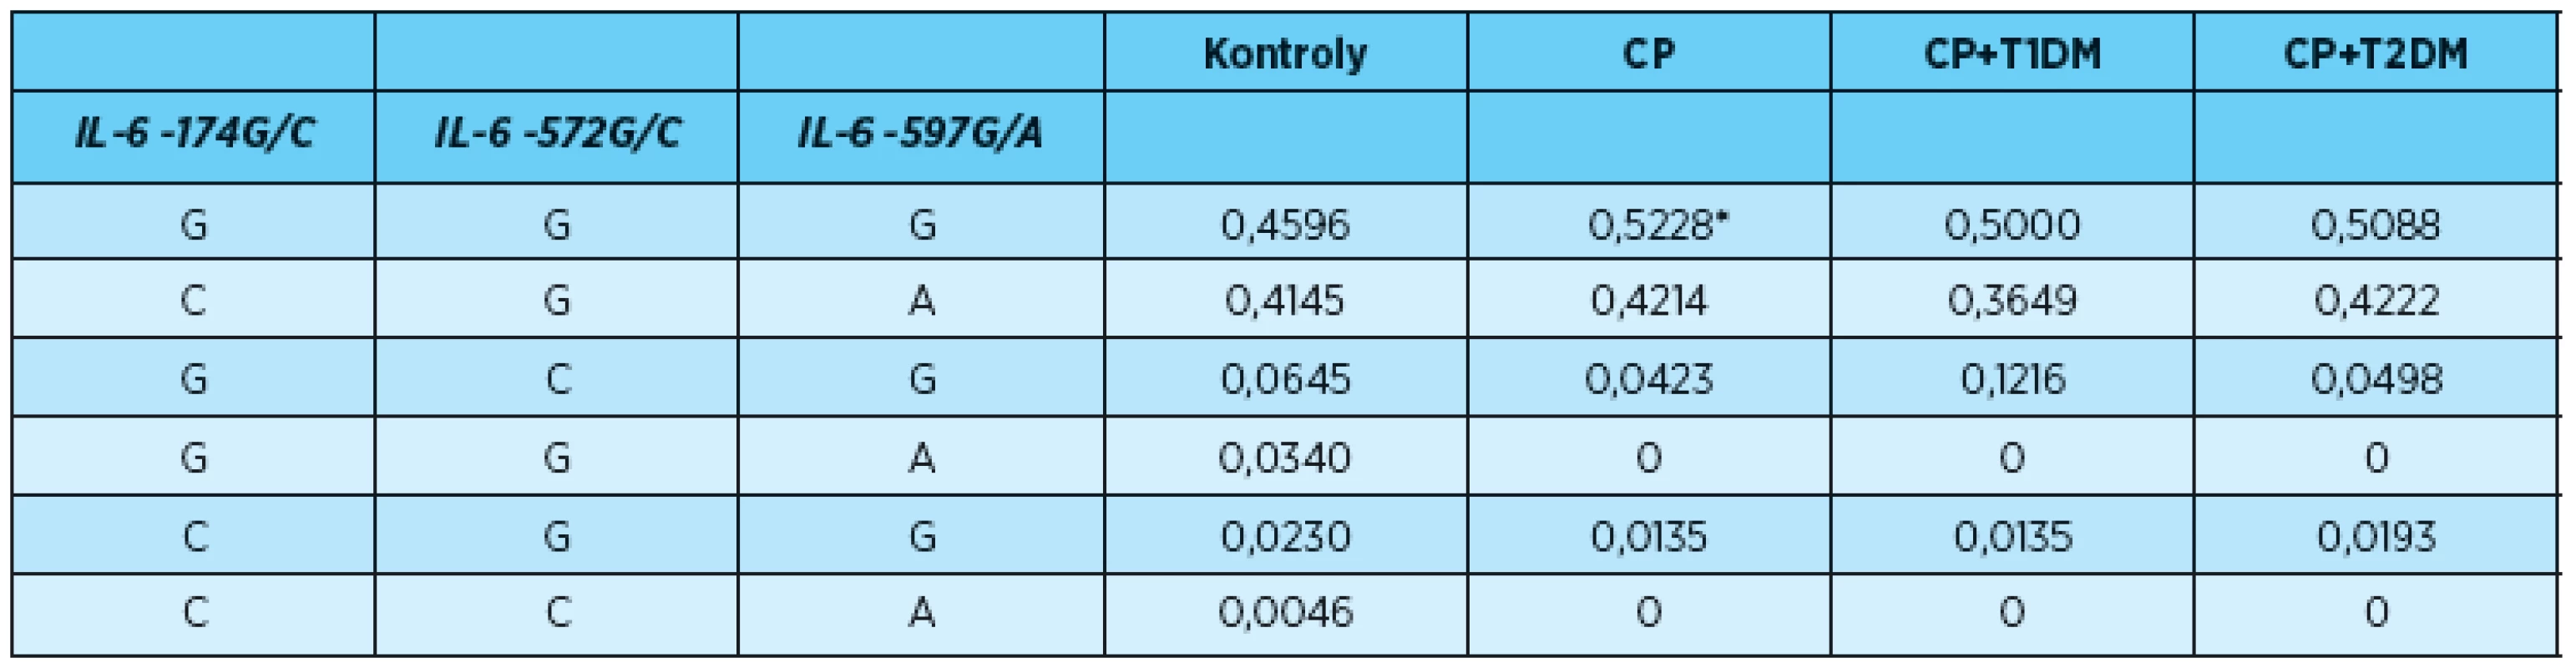 Frekvence<em> IL-6</em> haplotypů u pacientů s CP, CP+T1DM, CP+T2DM a u kontrol